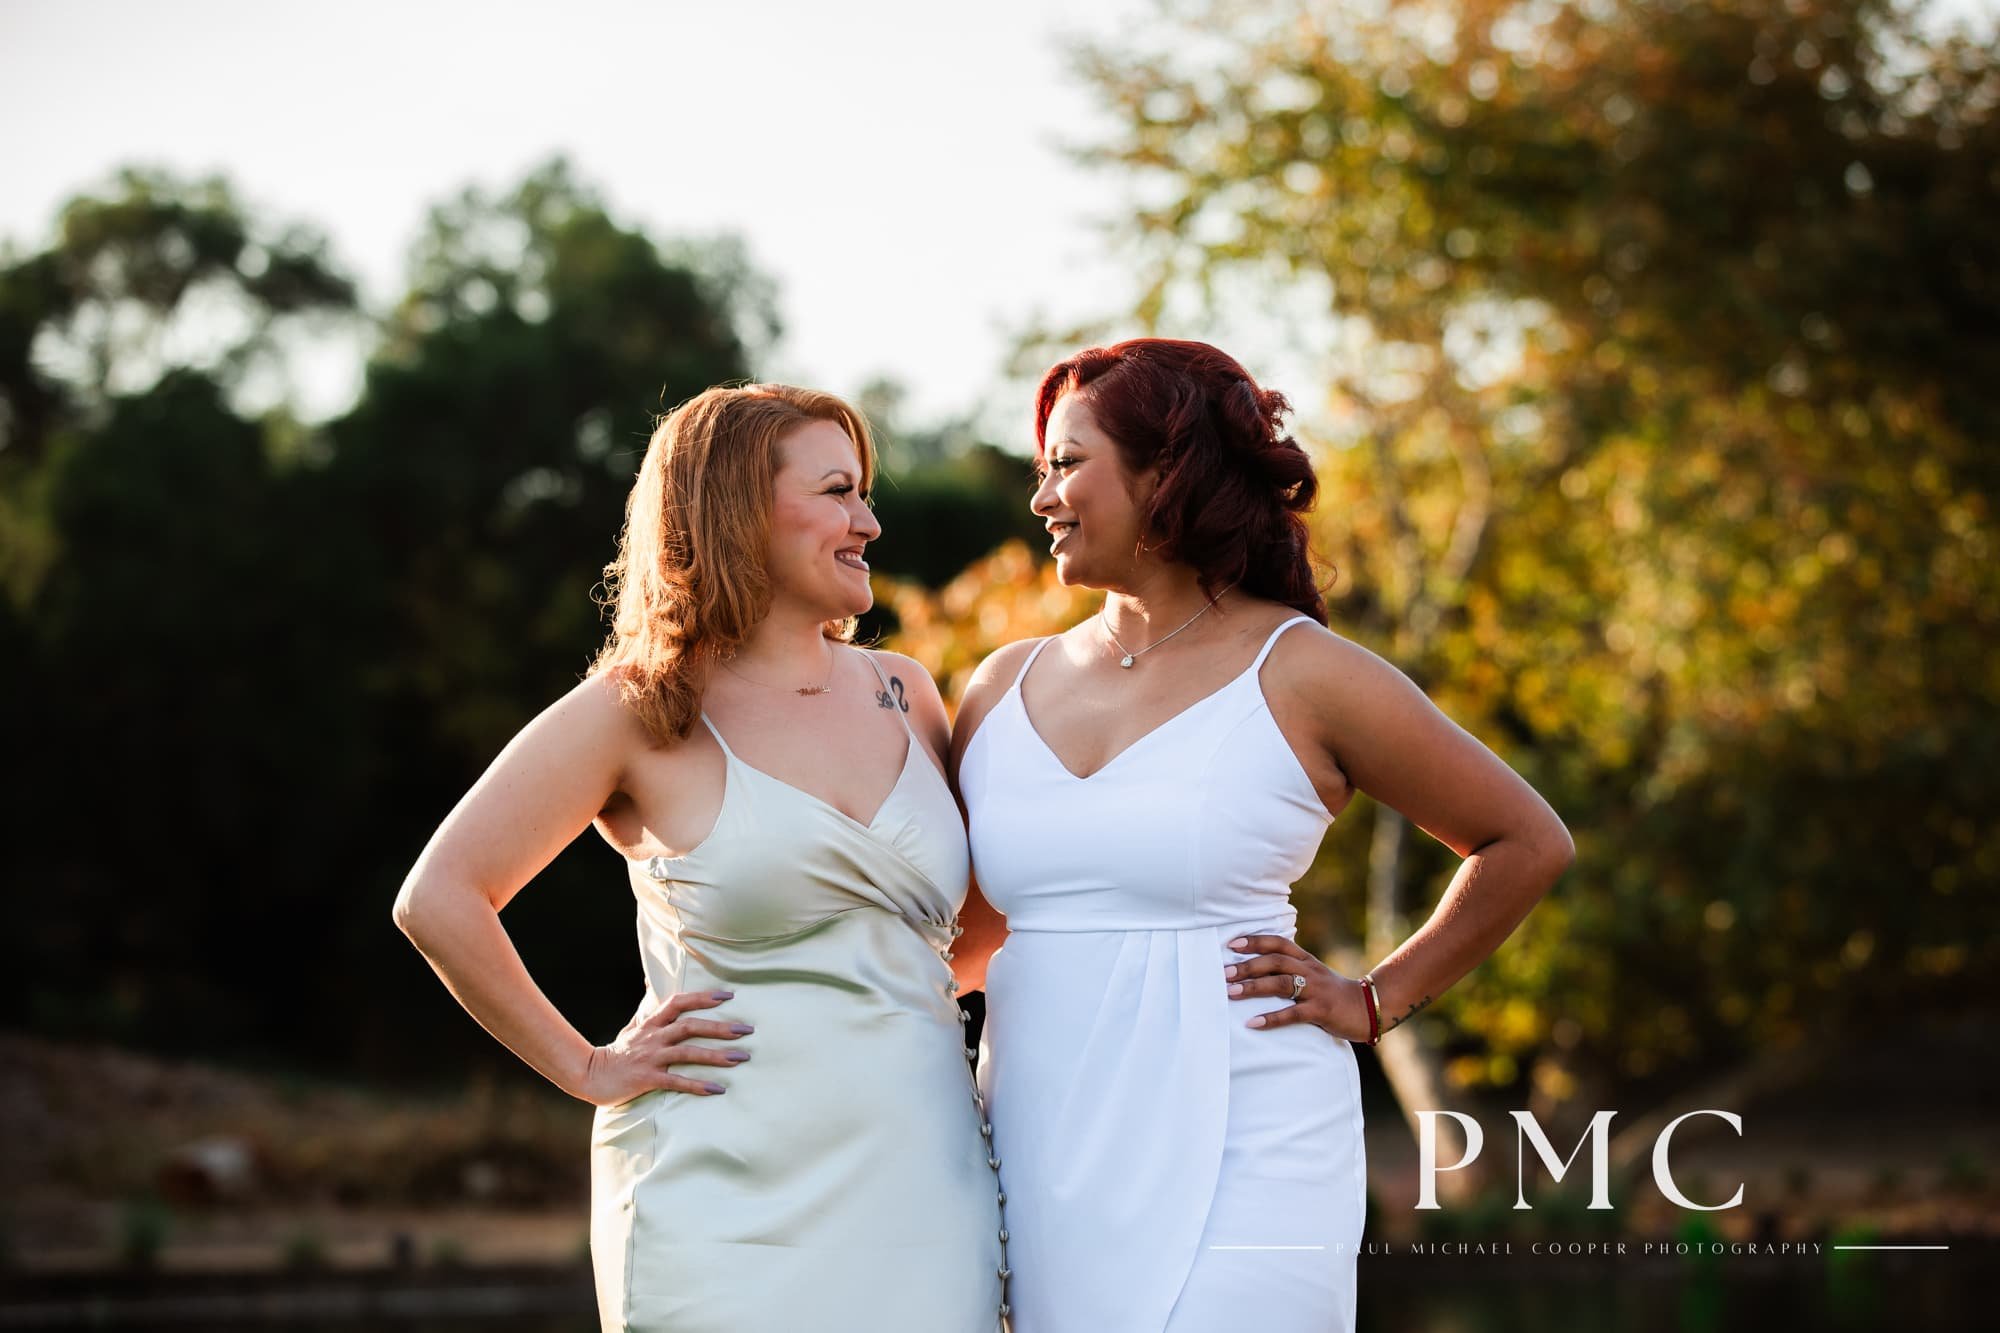 Monserate Winery LGBTQ+ Engagement Session - Best San Diego Wedding Photographer-8.jpg